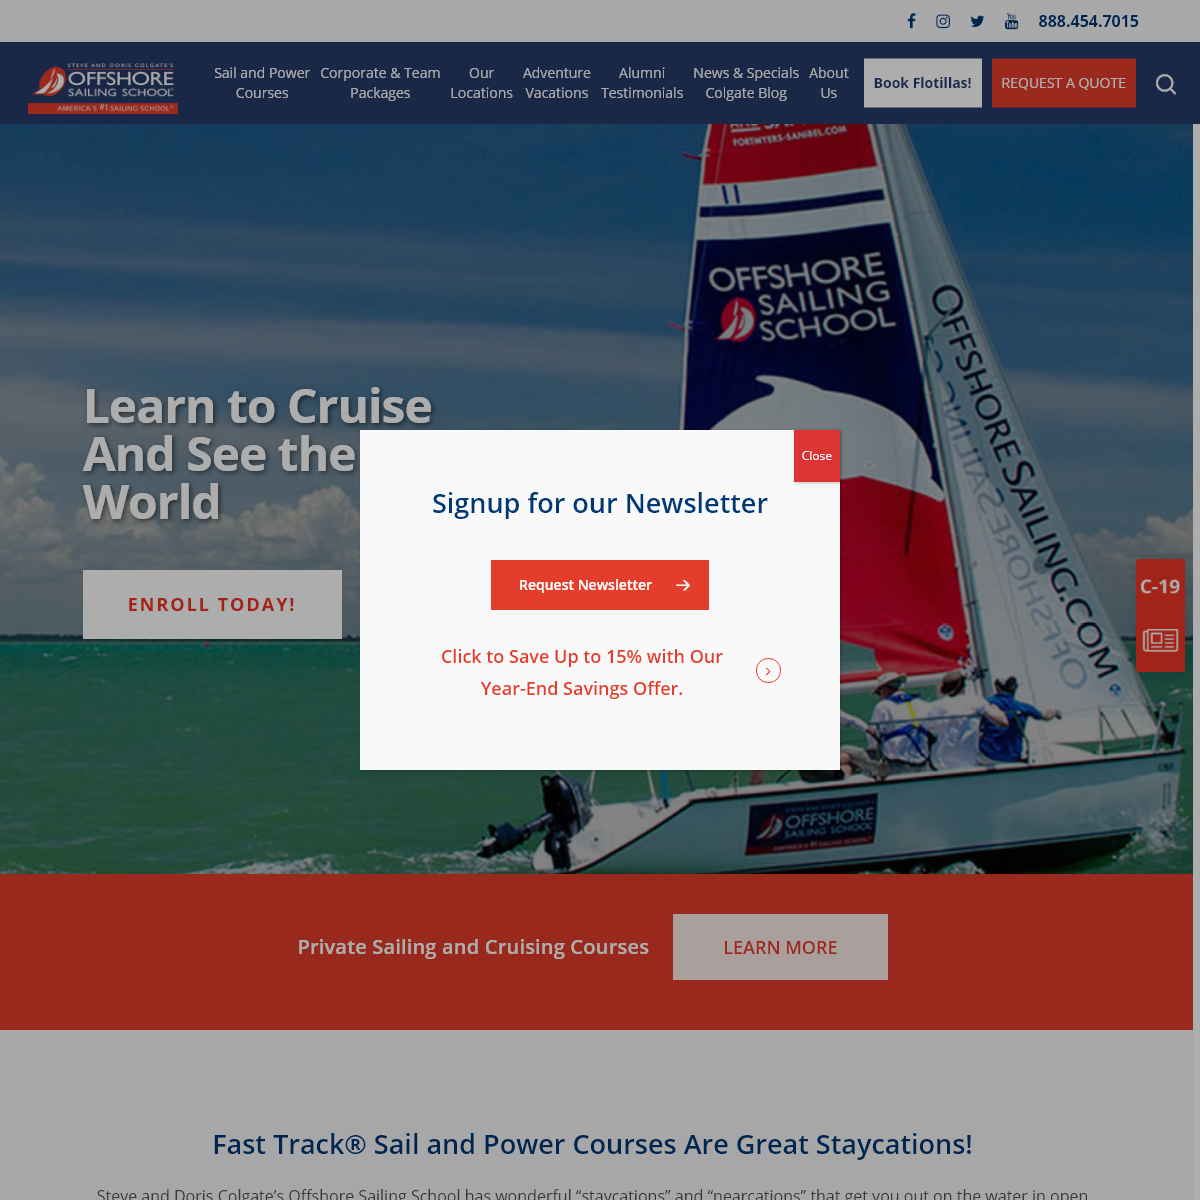 A complete backup of offshoresailing.com